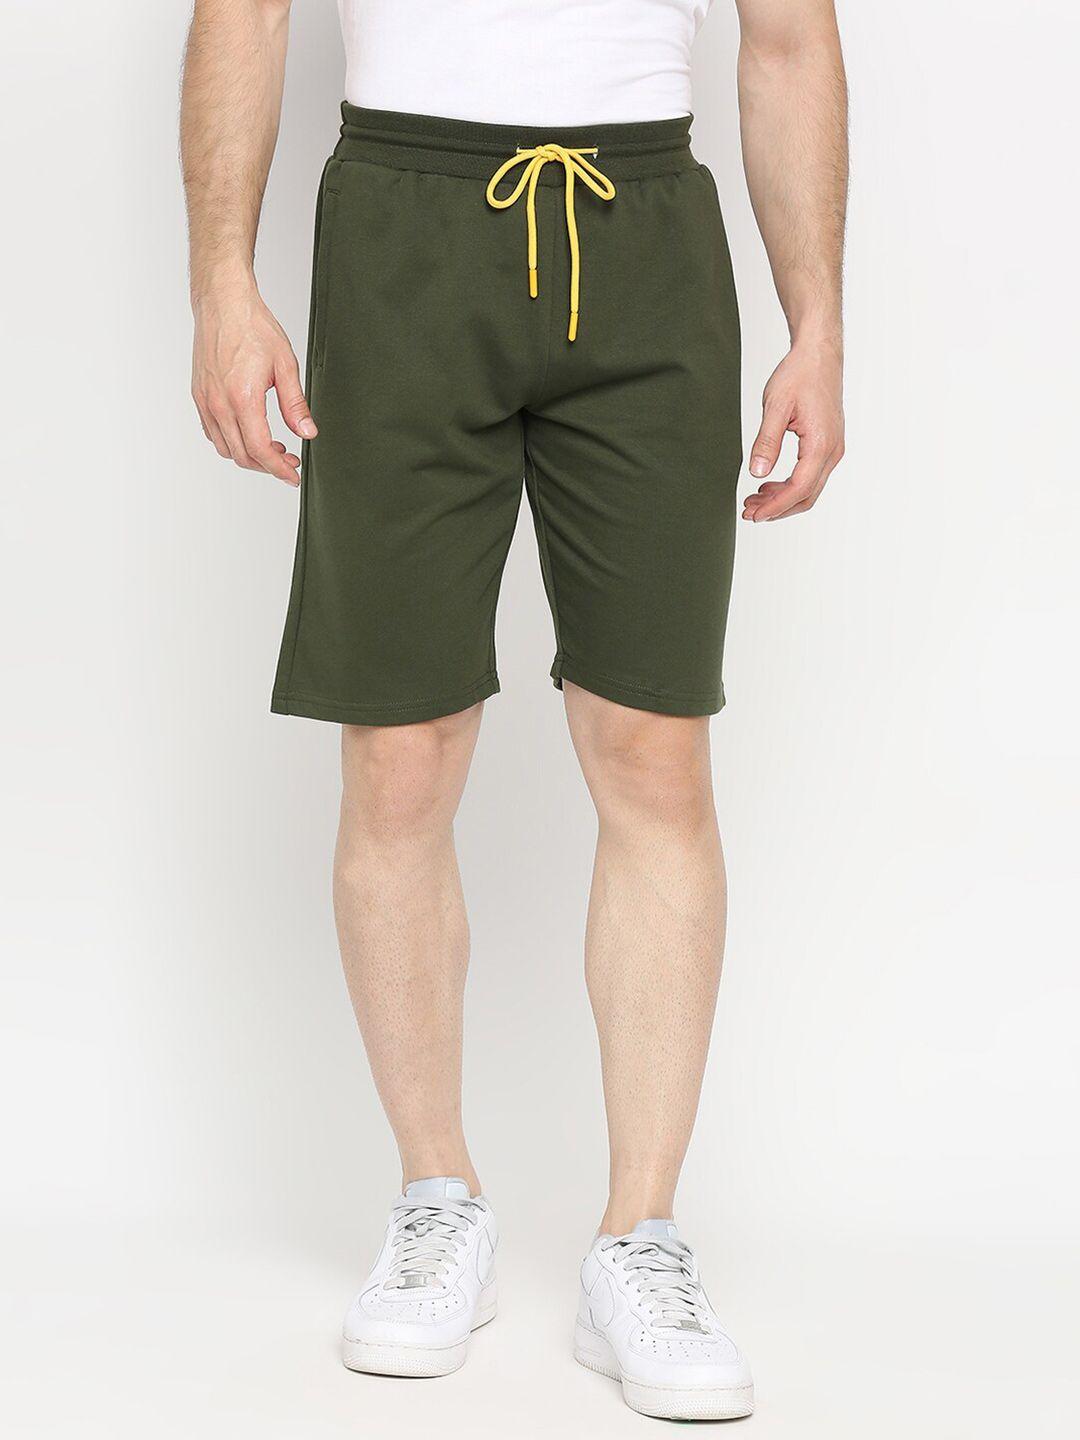 underjeans-by-spykar-men-olive-green-solid-shorts